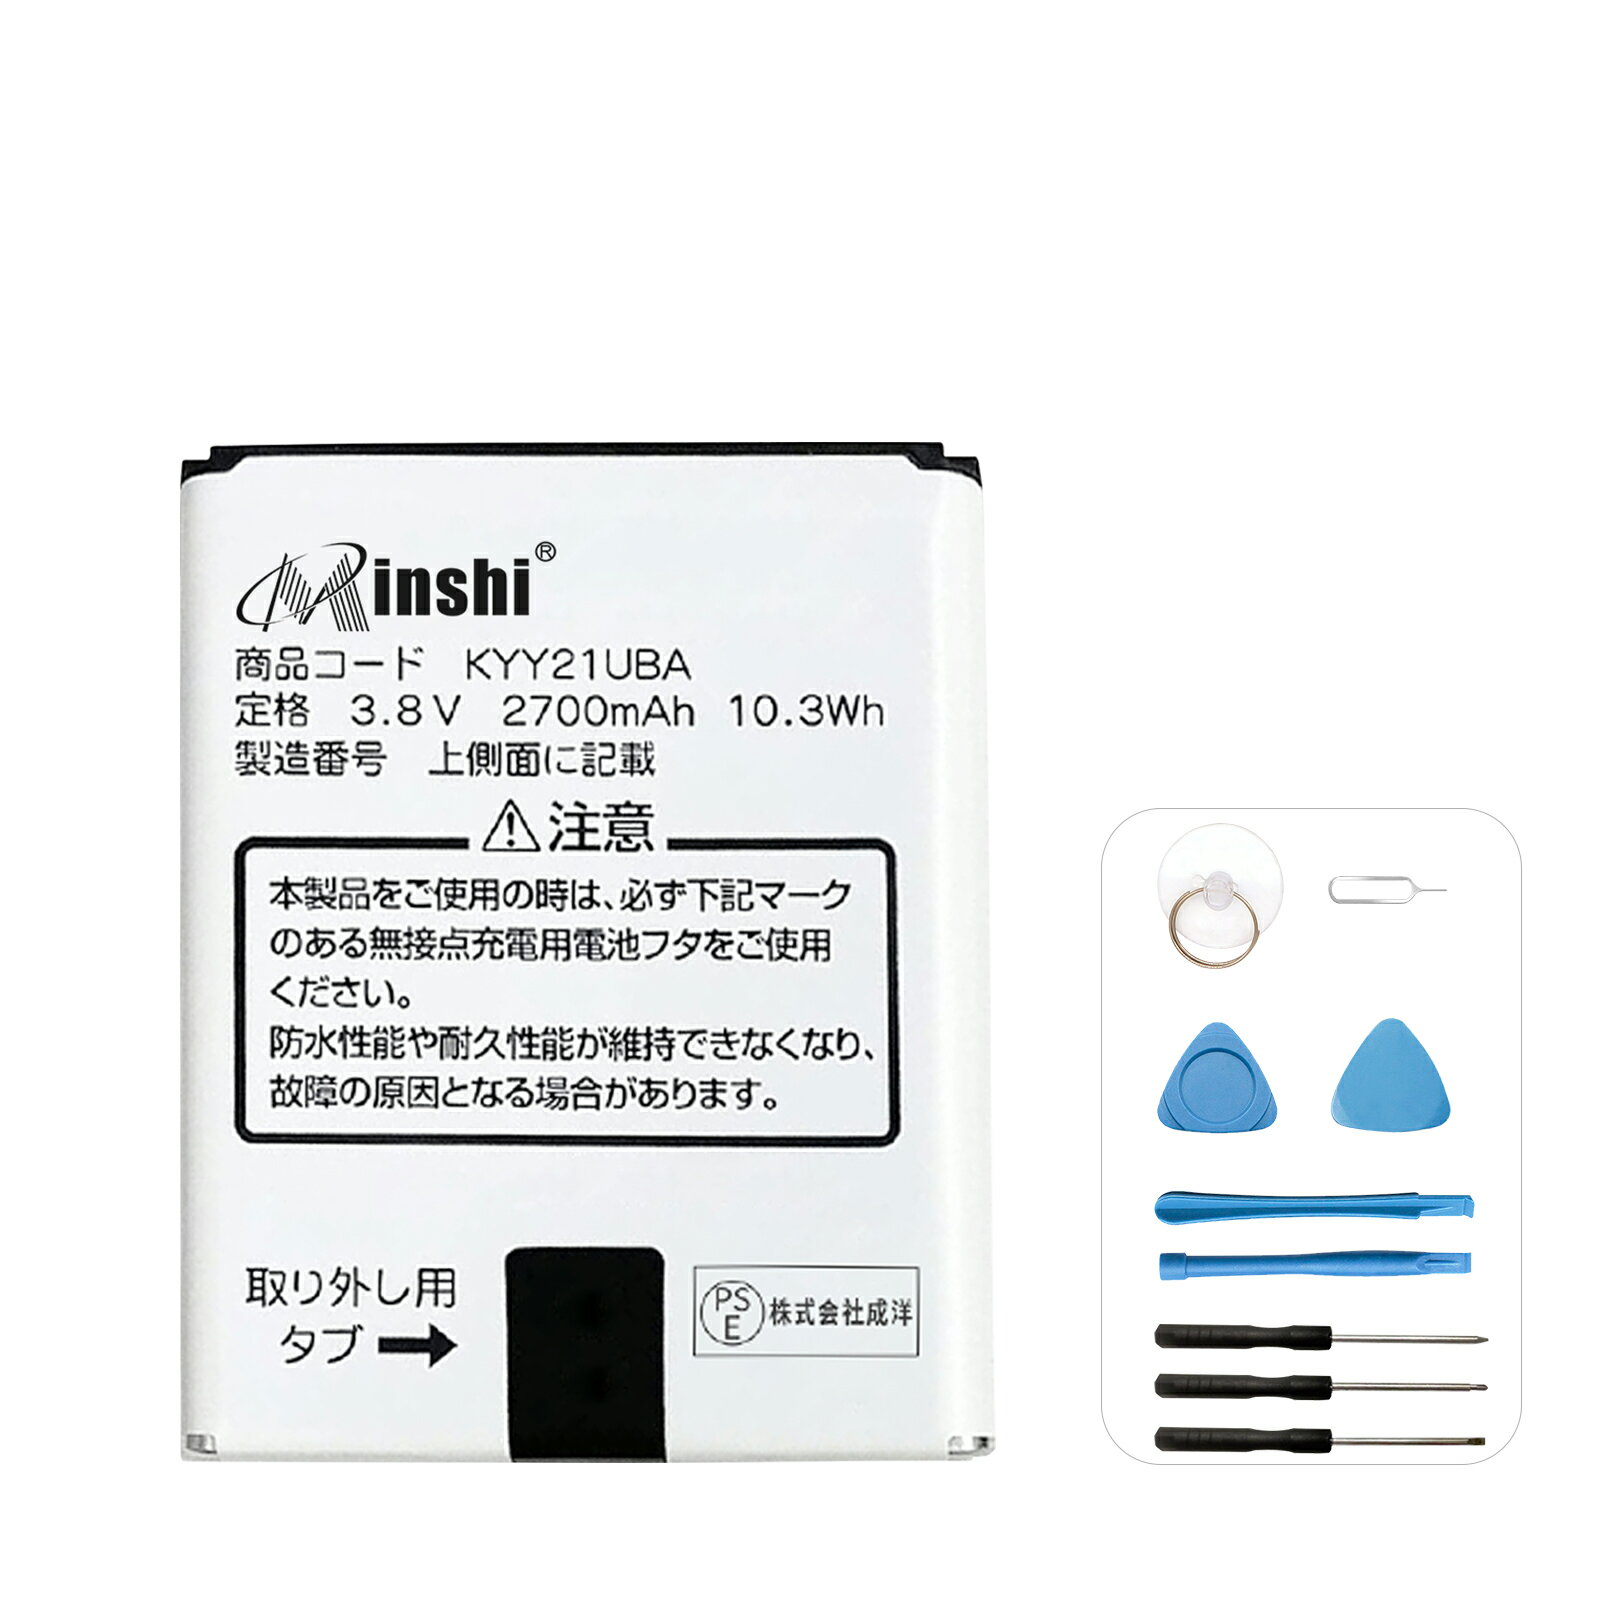 minshi 新品 京セラ KYY21UBA 互換バッテリー URBANO L02/URBANO L01/KYY21UBA高品質交換用電池パック PSE認証 工具セット 1年間保証 2700mAh